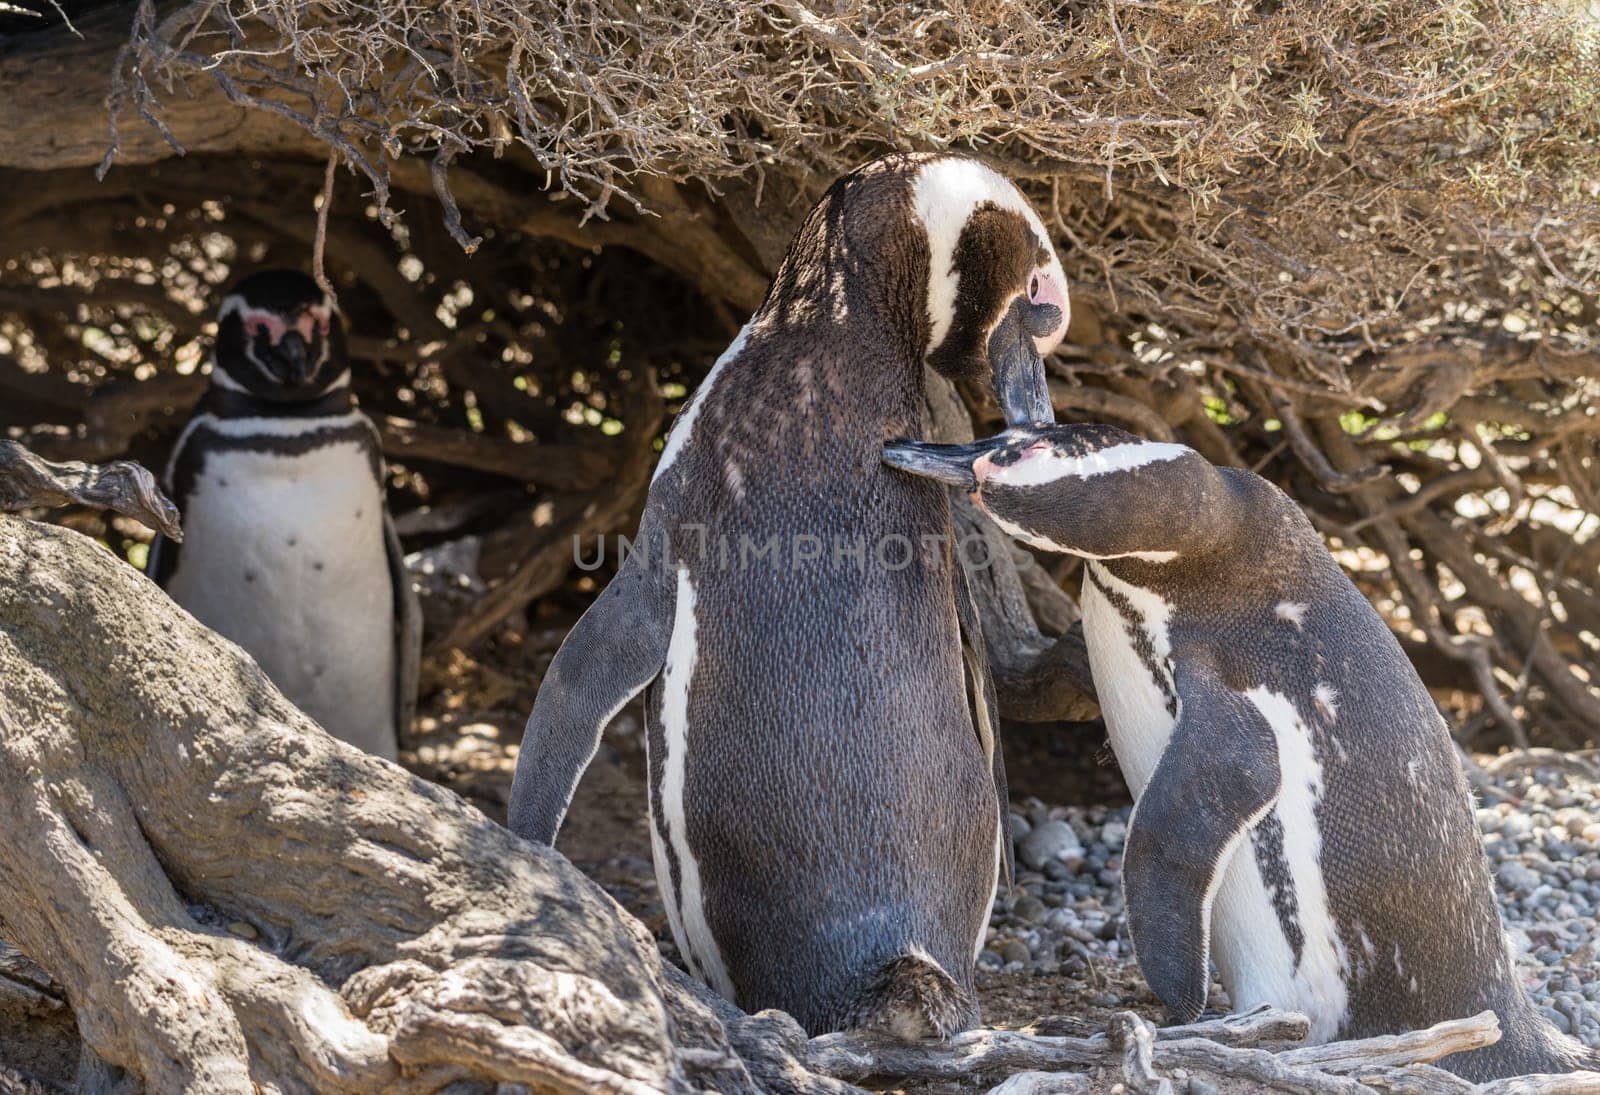 Pair of magellanic penguin in their nest in ground in Punta Tombo penguin sanctuary Argentina